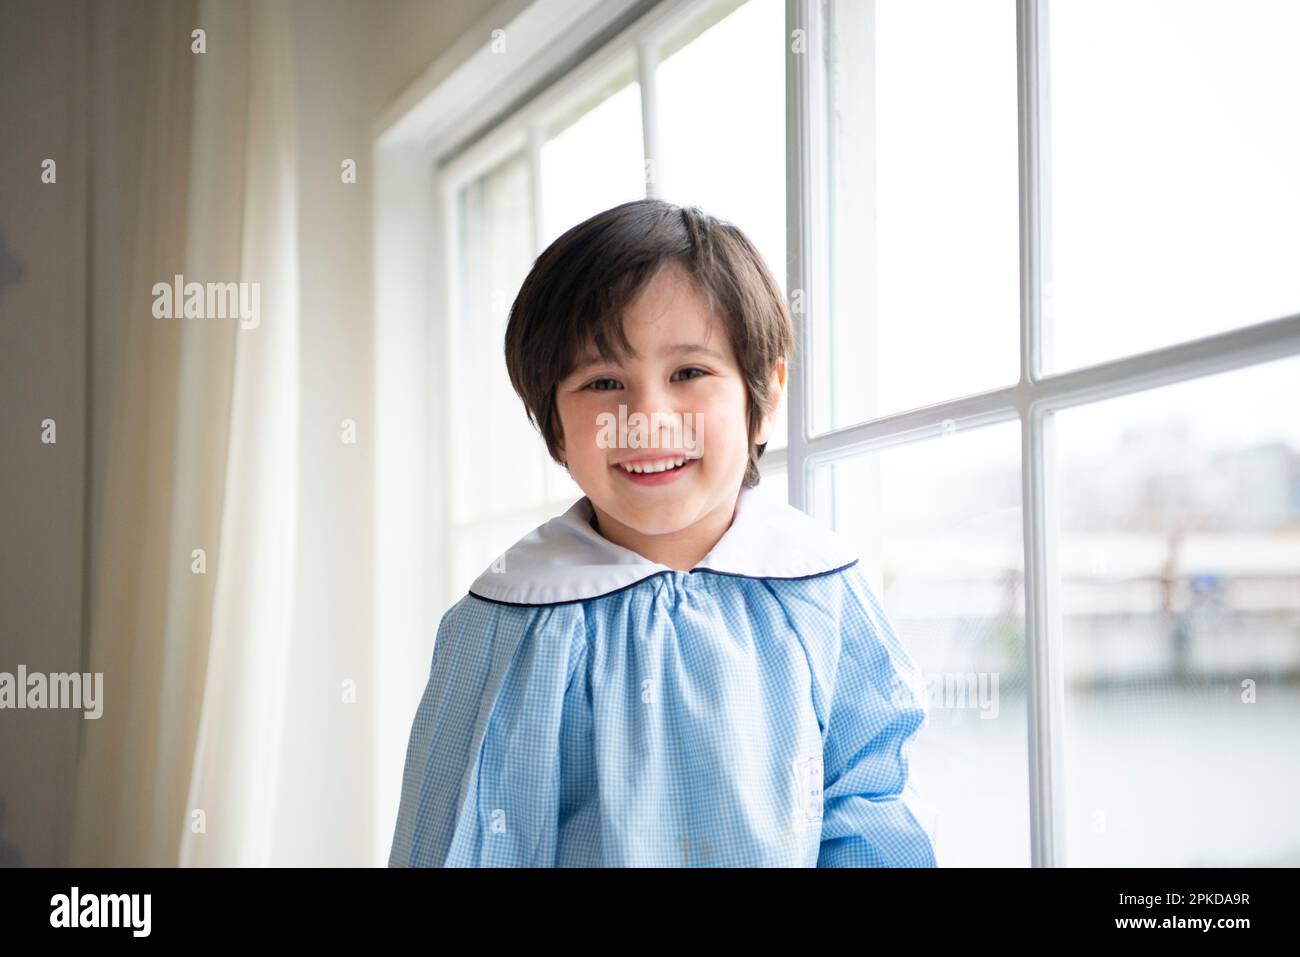 Smiling preschooler by the window Stock Photo